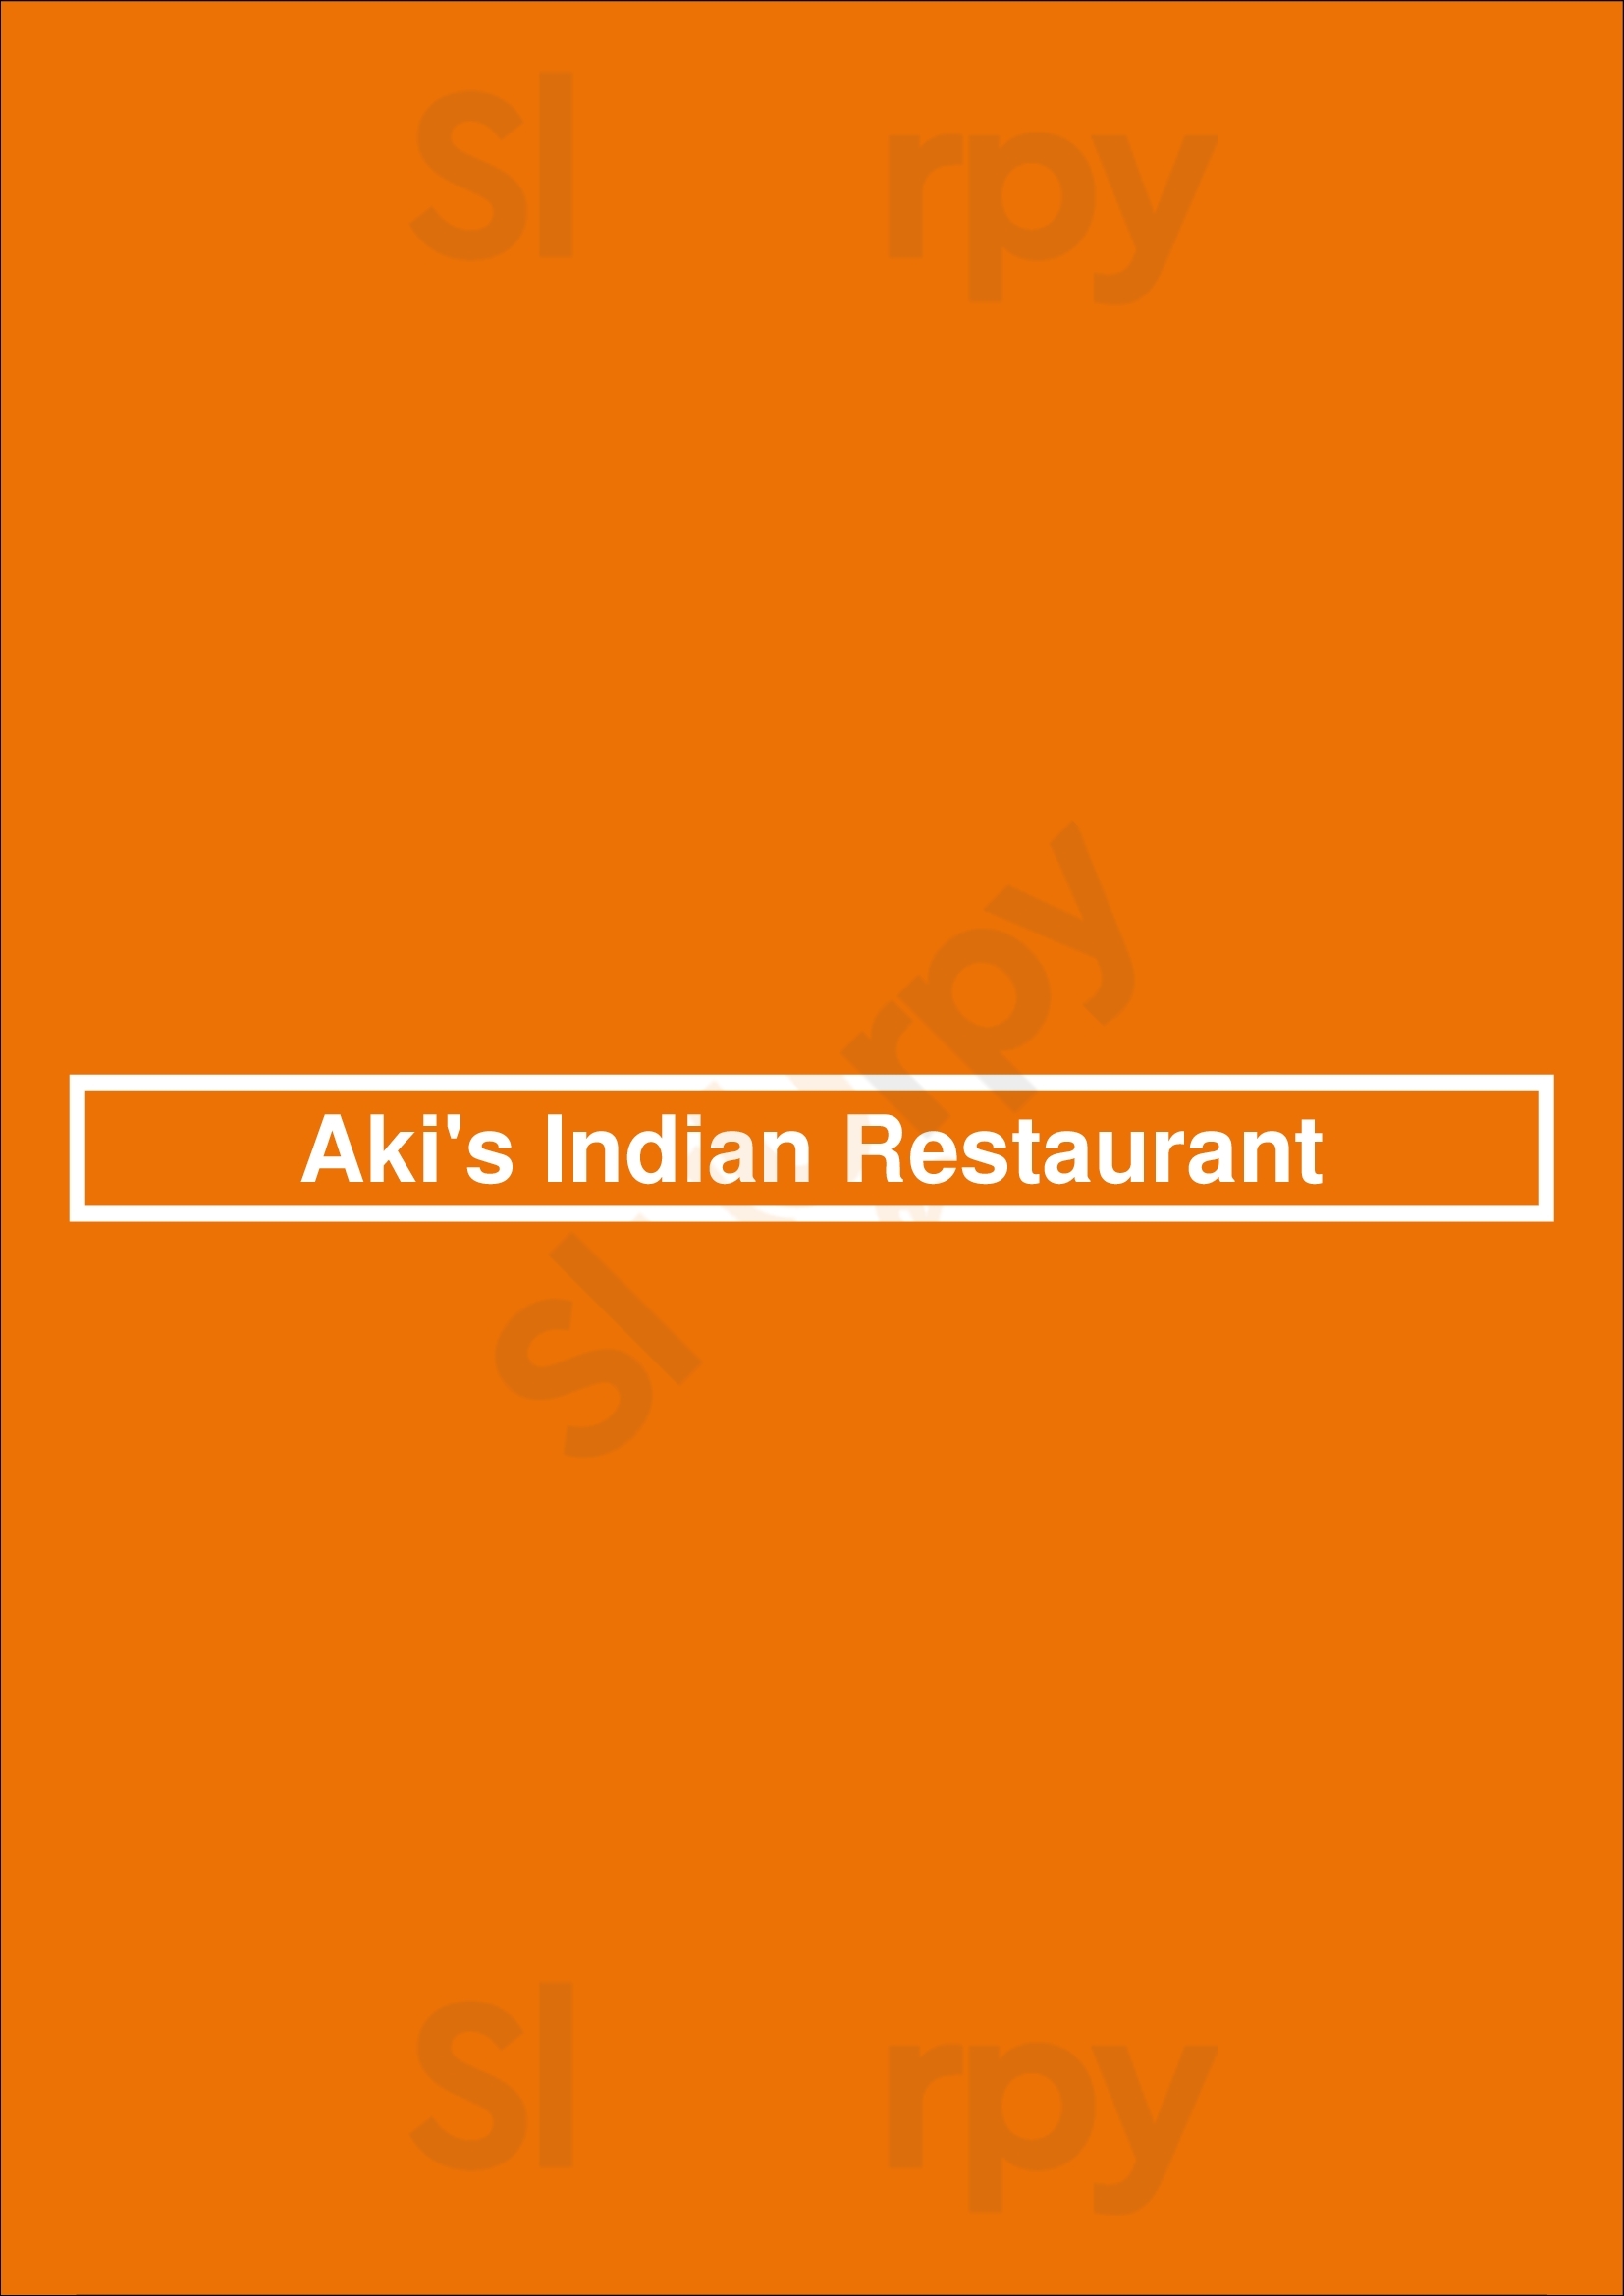 Aki's Indian Restaurant Sydney Menu - 1